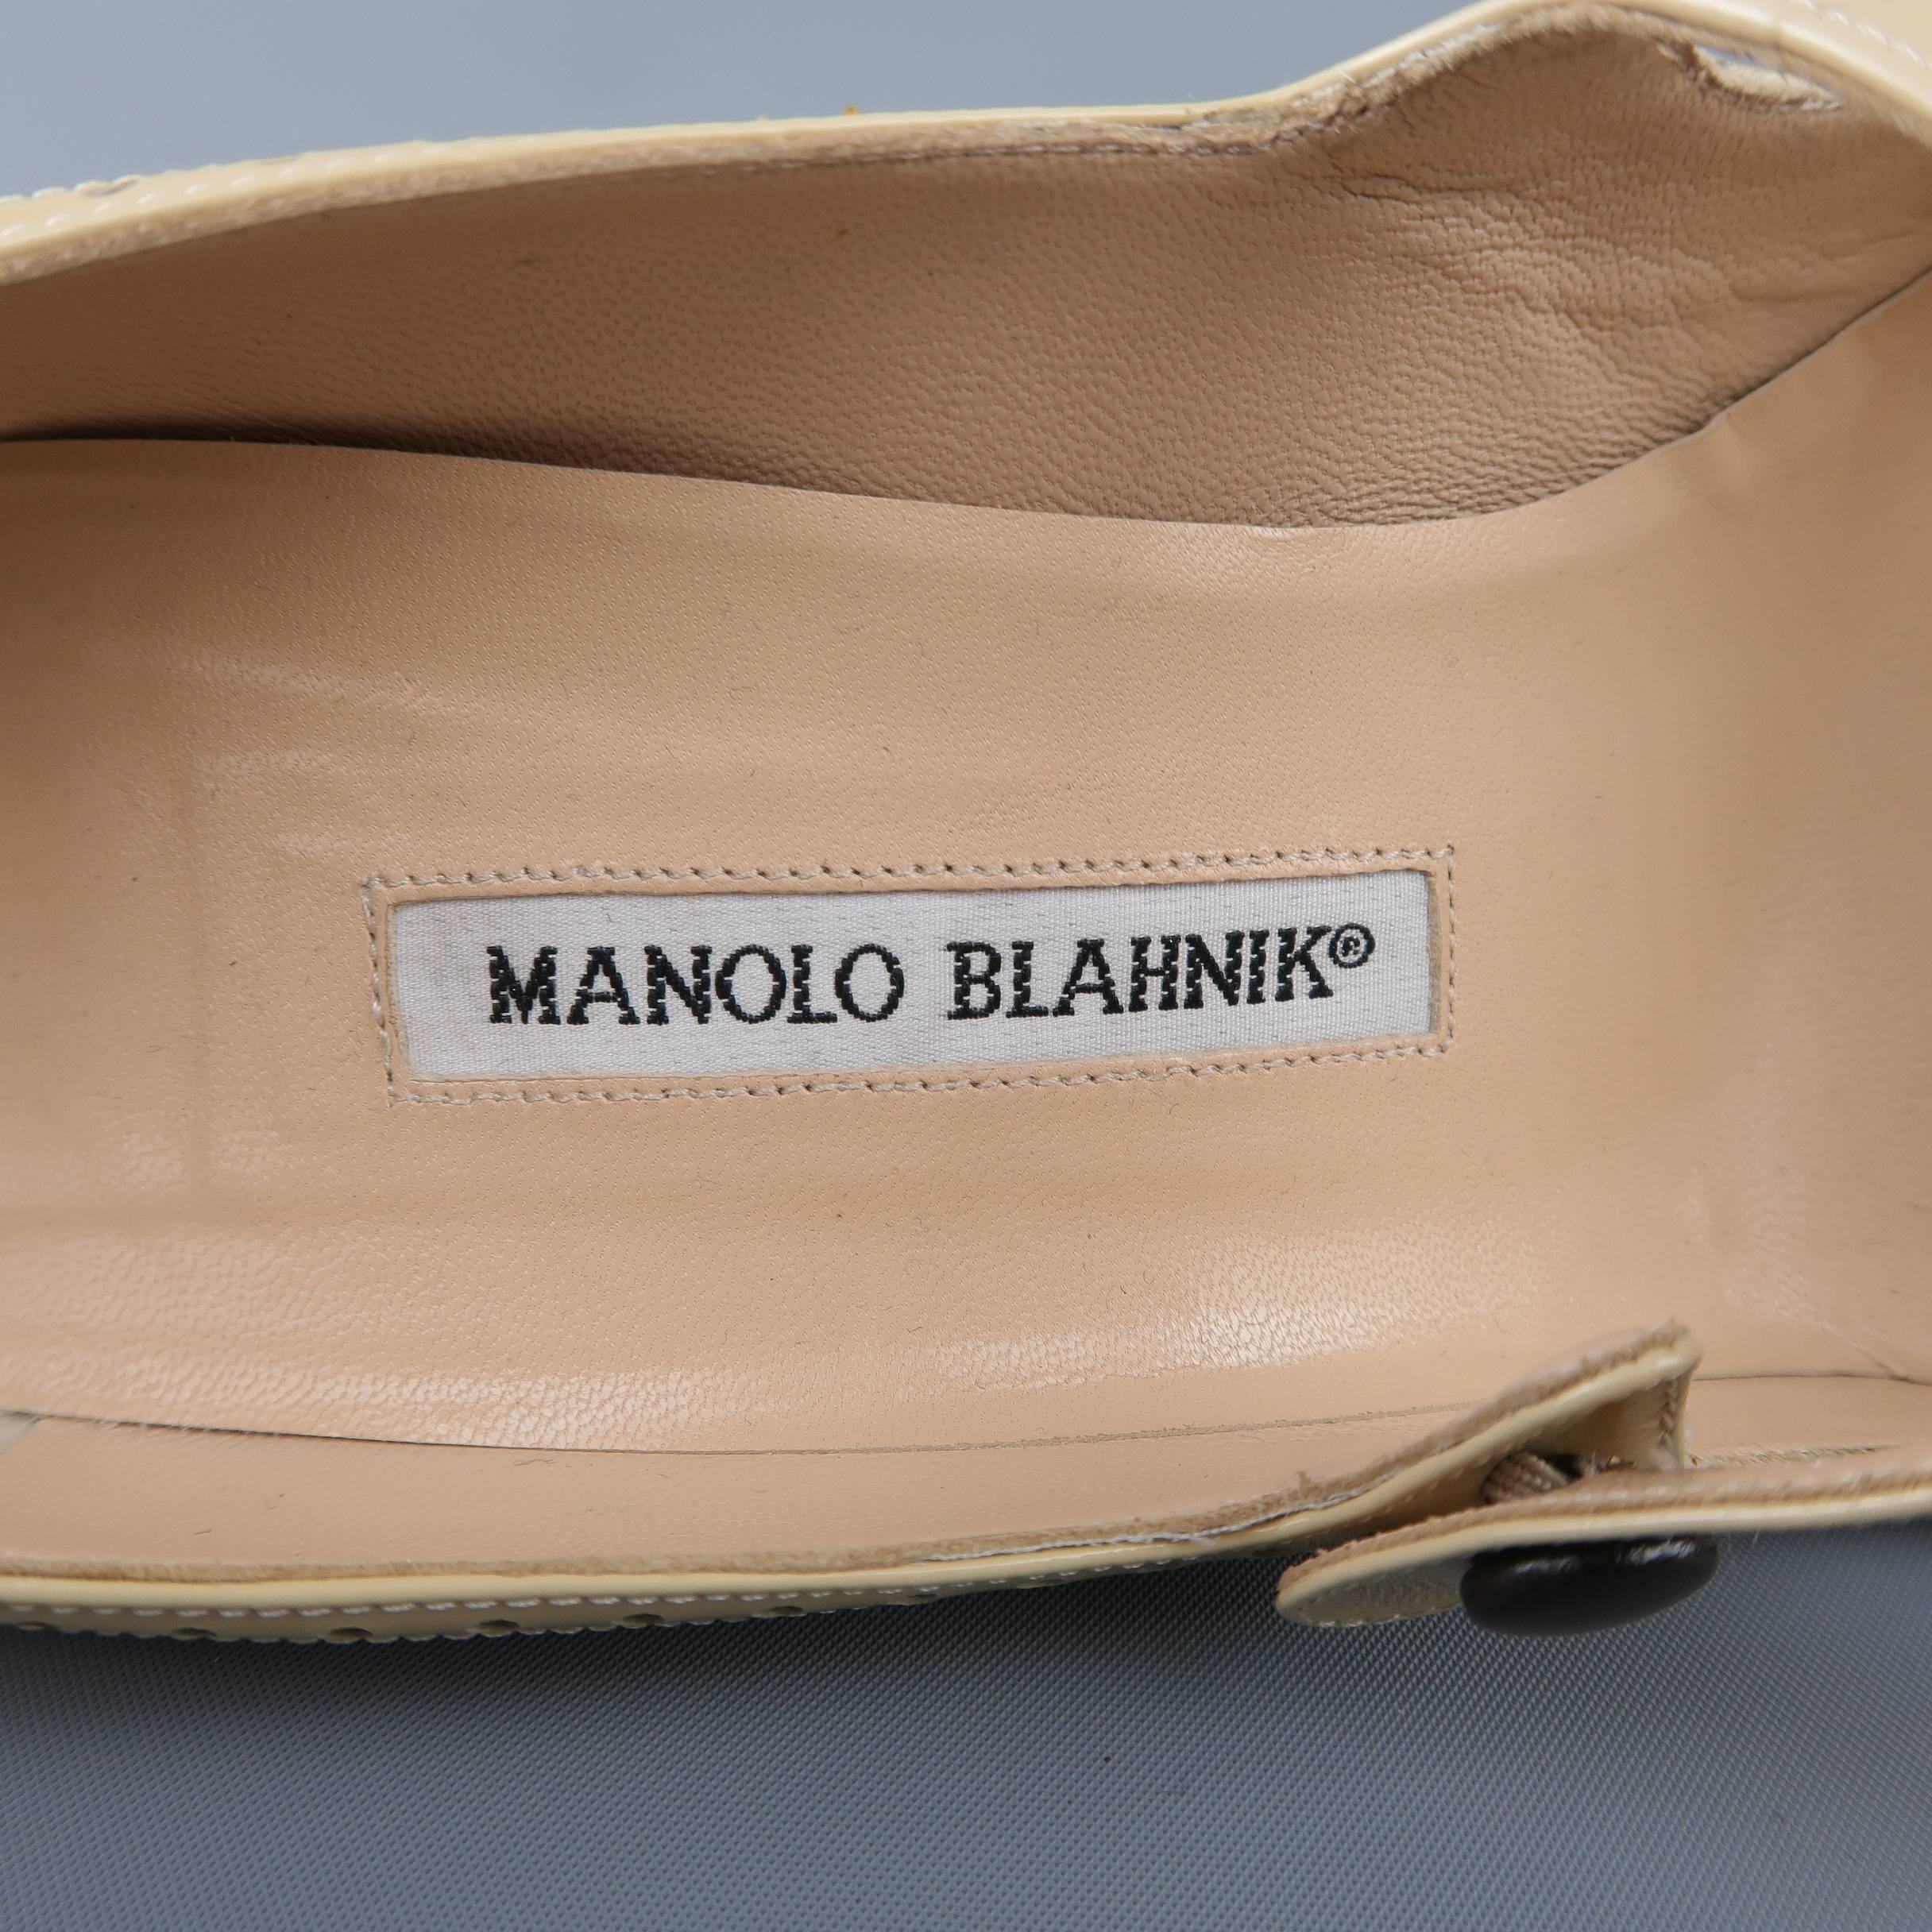 MANOLO BLAHNIK Size 8.5 Beige Patent Leather Mary Jane Brogue Pumps 2